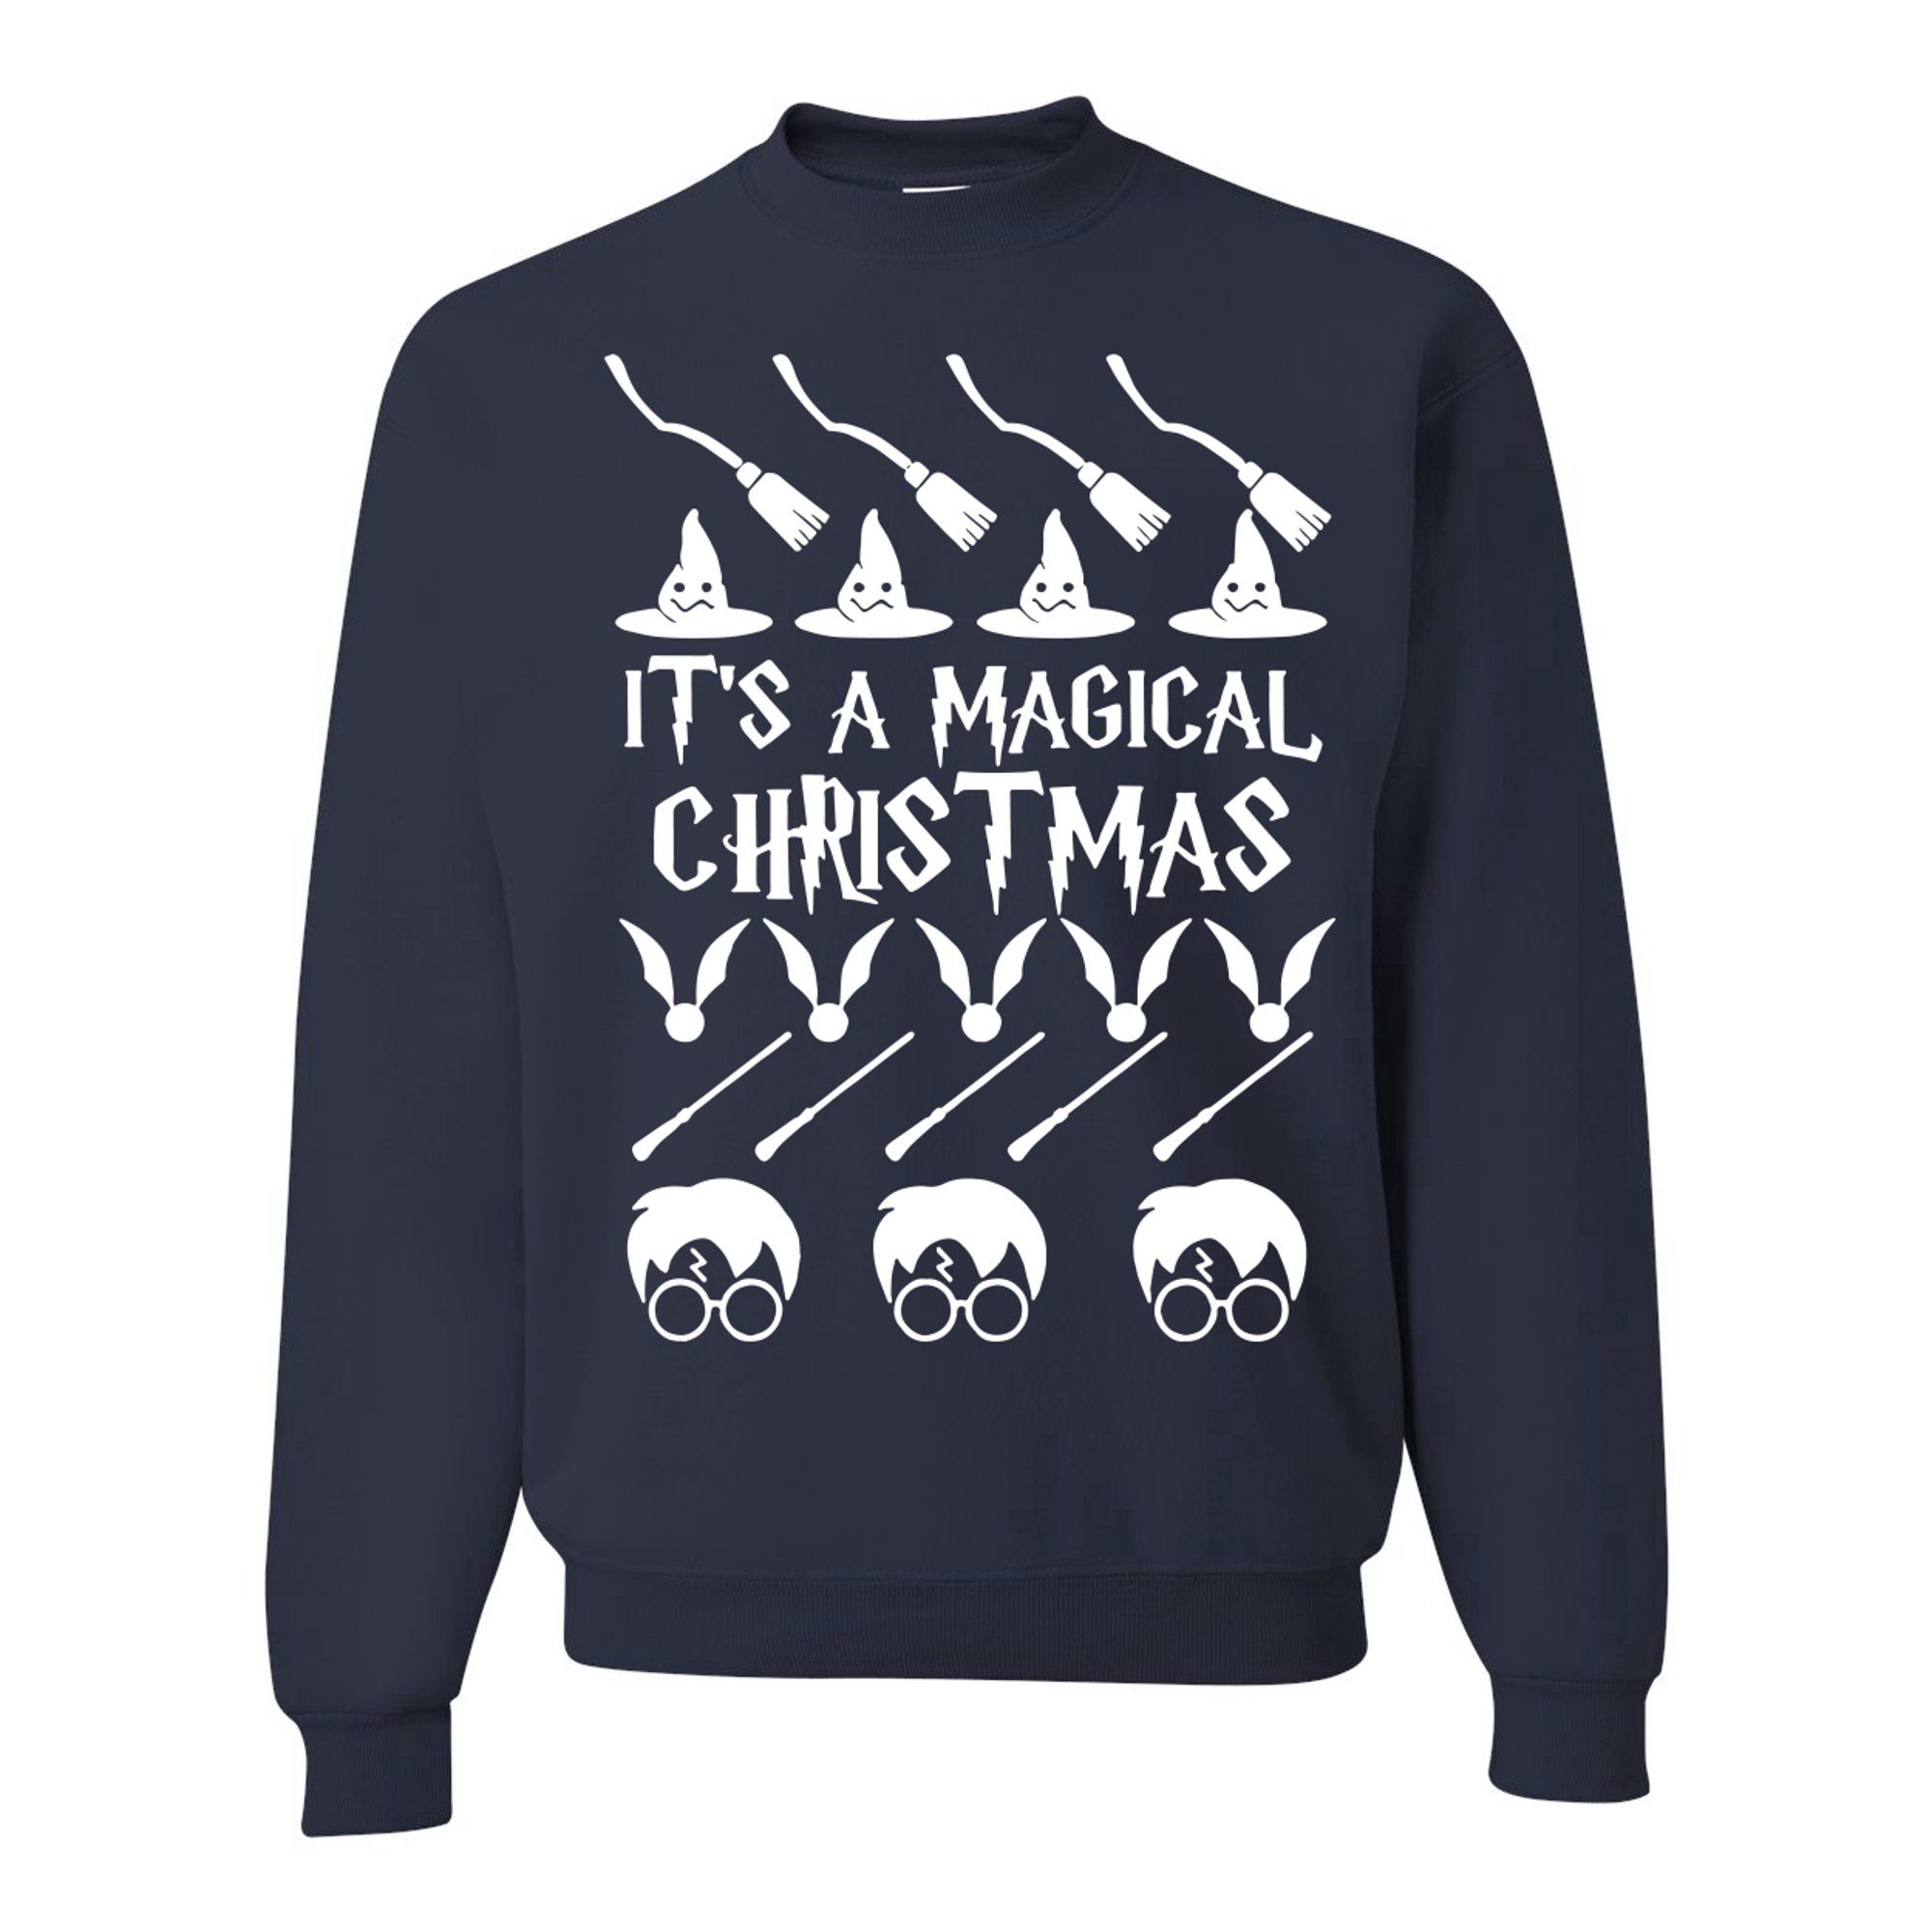 It's A Magical Christmas Wizard Christmas Sweatshirt Style: Sweatshirt, Color: Black